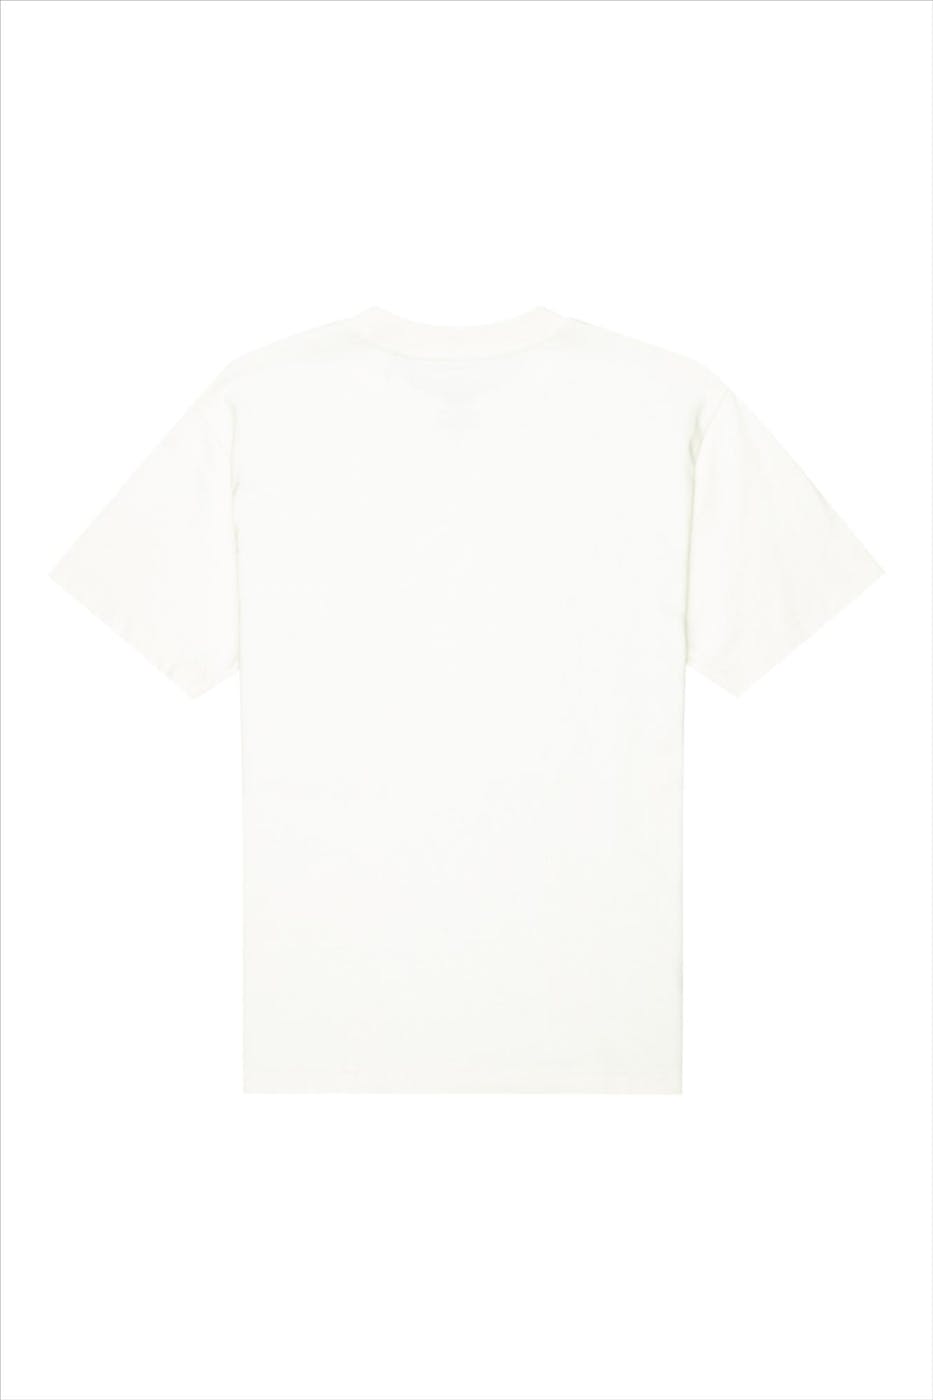 Element - Ecru Crail T-shirt